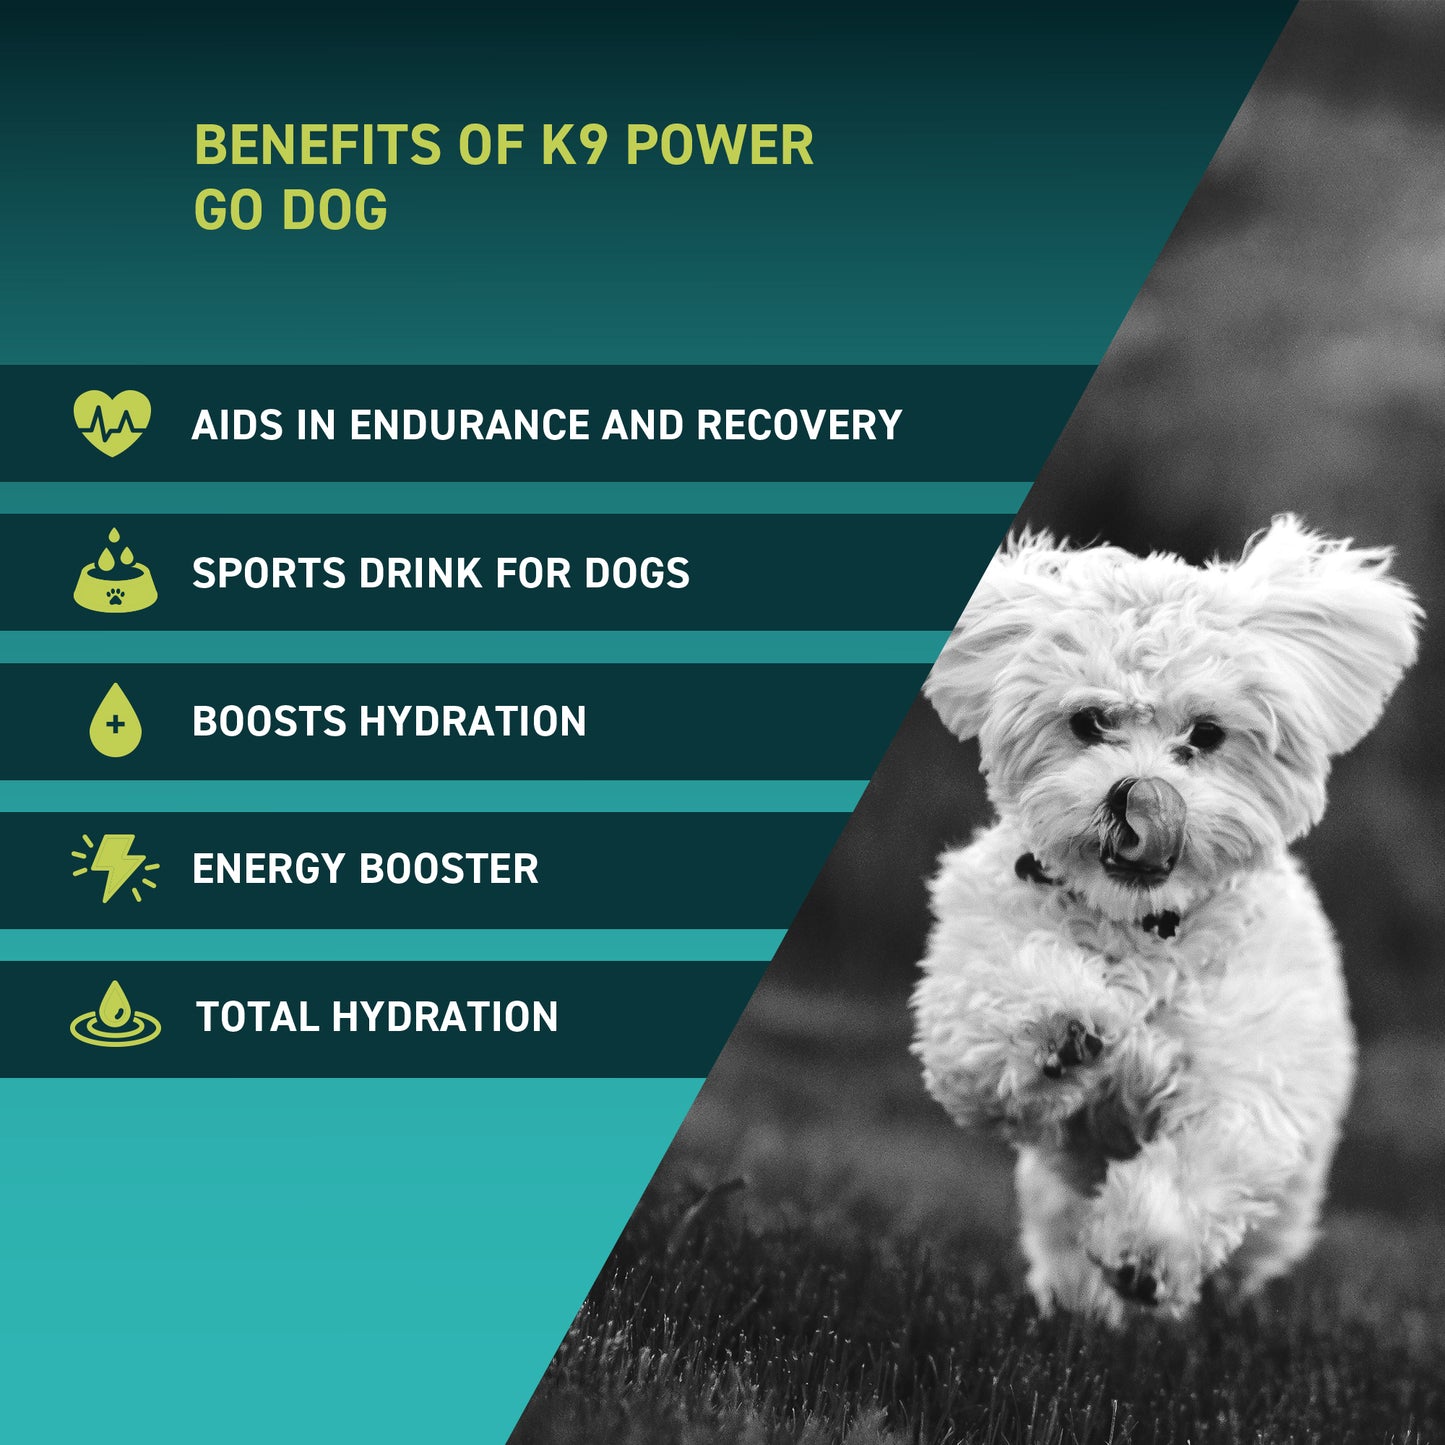 Go Dog Benefits